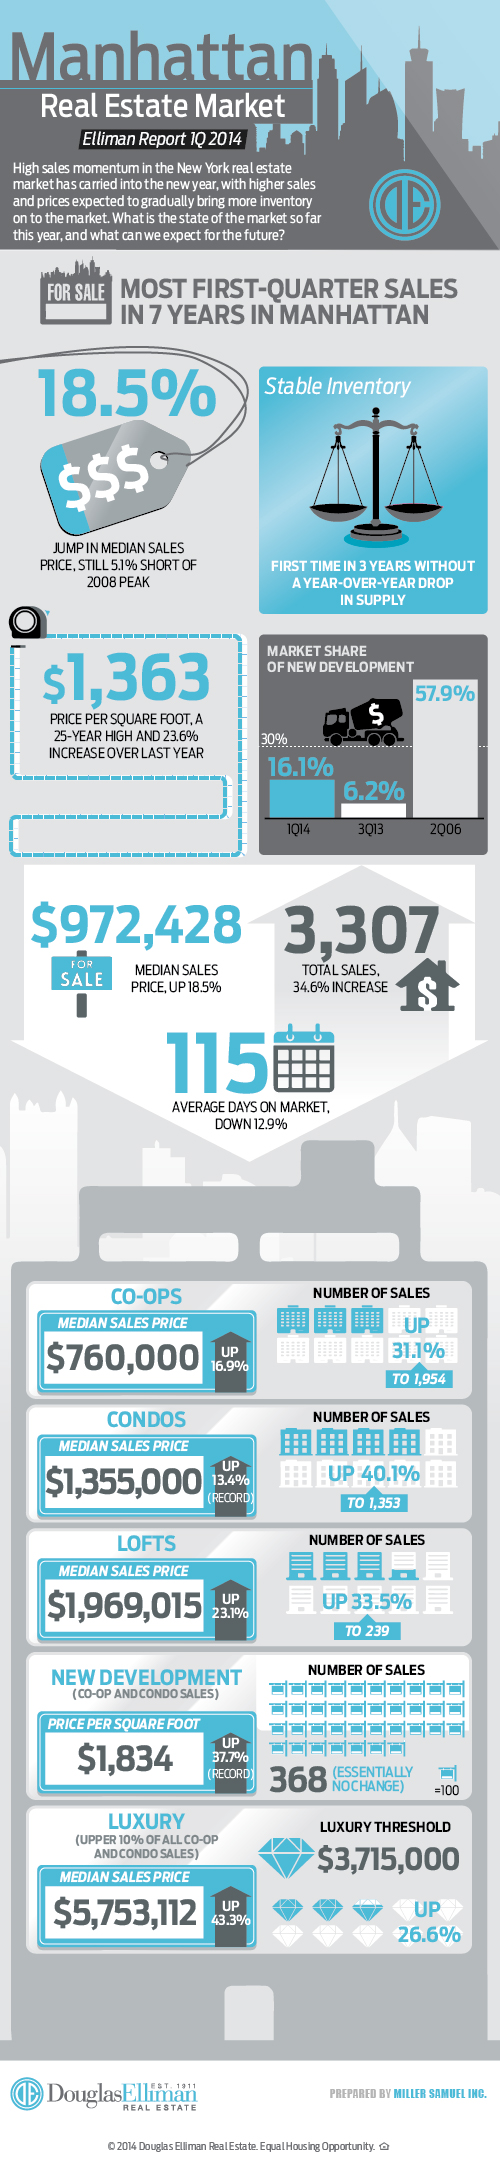 Manhattan Market Report Infographic